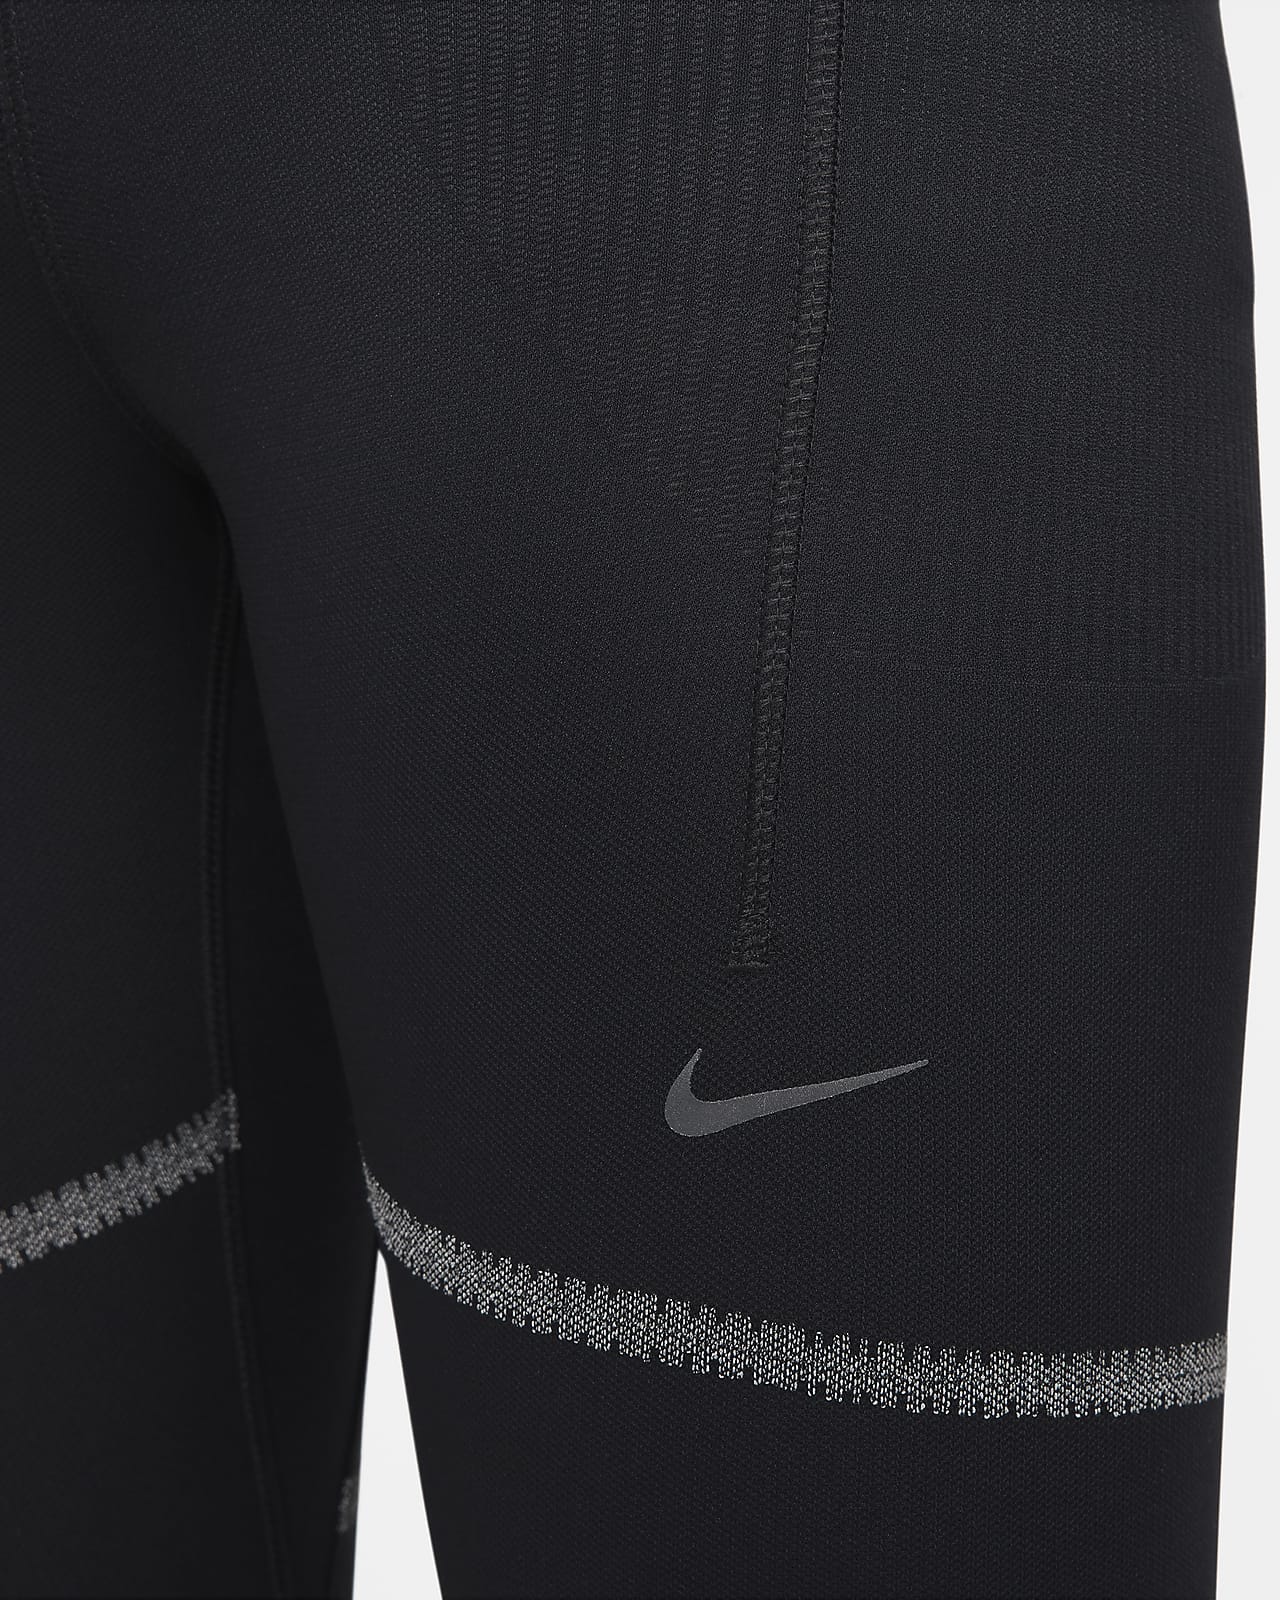 New/ W Tags Mens Nike Filament Team Navy Running Tights Pants